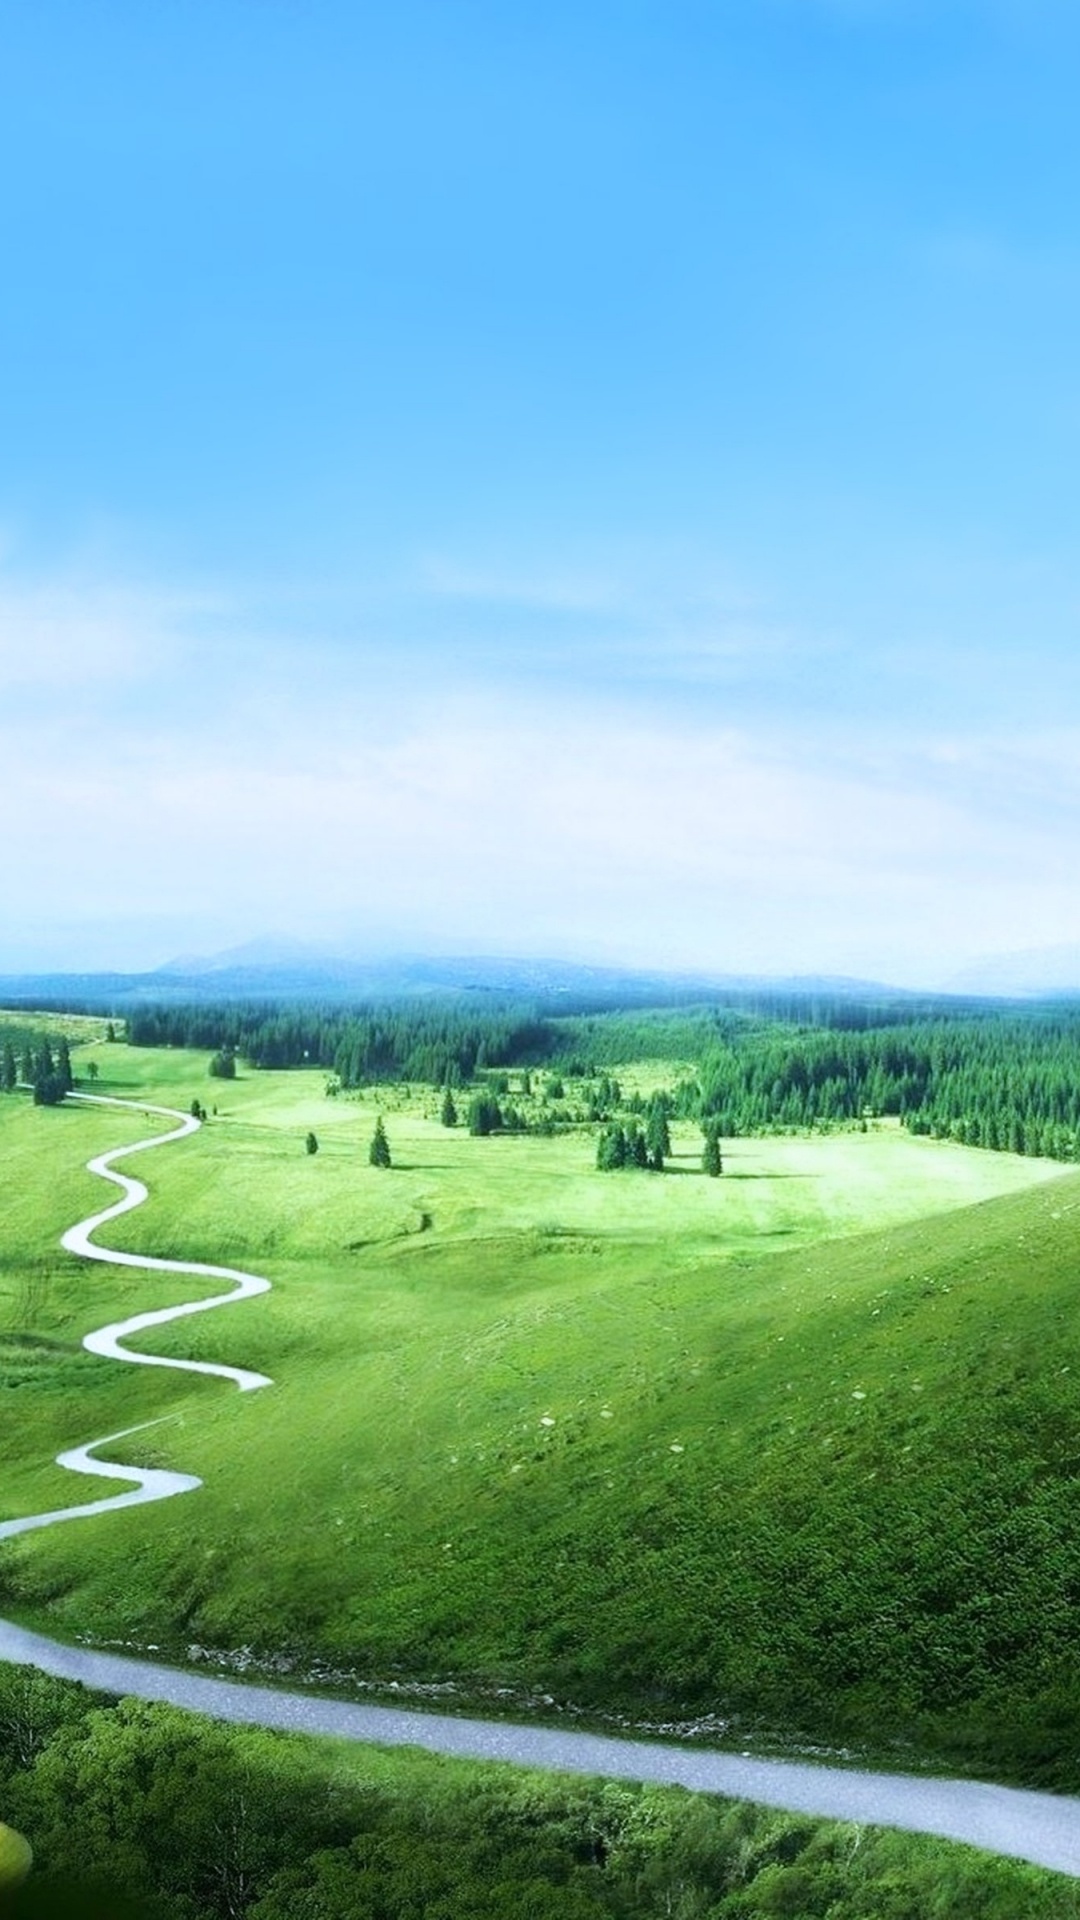 Green Grass Field Under Blue Sky During Daytime. Wallpaper in 1080x1920 Resolution